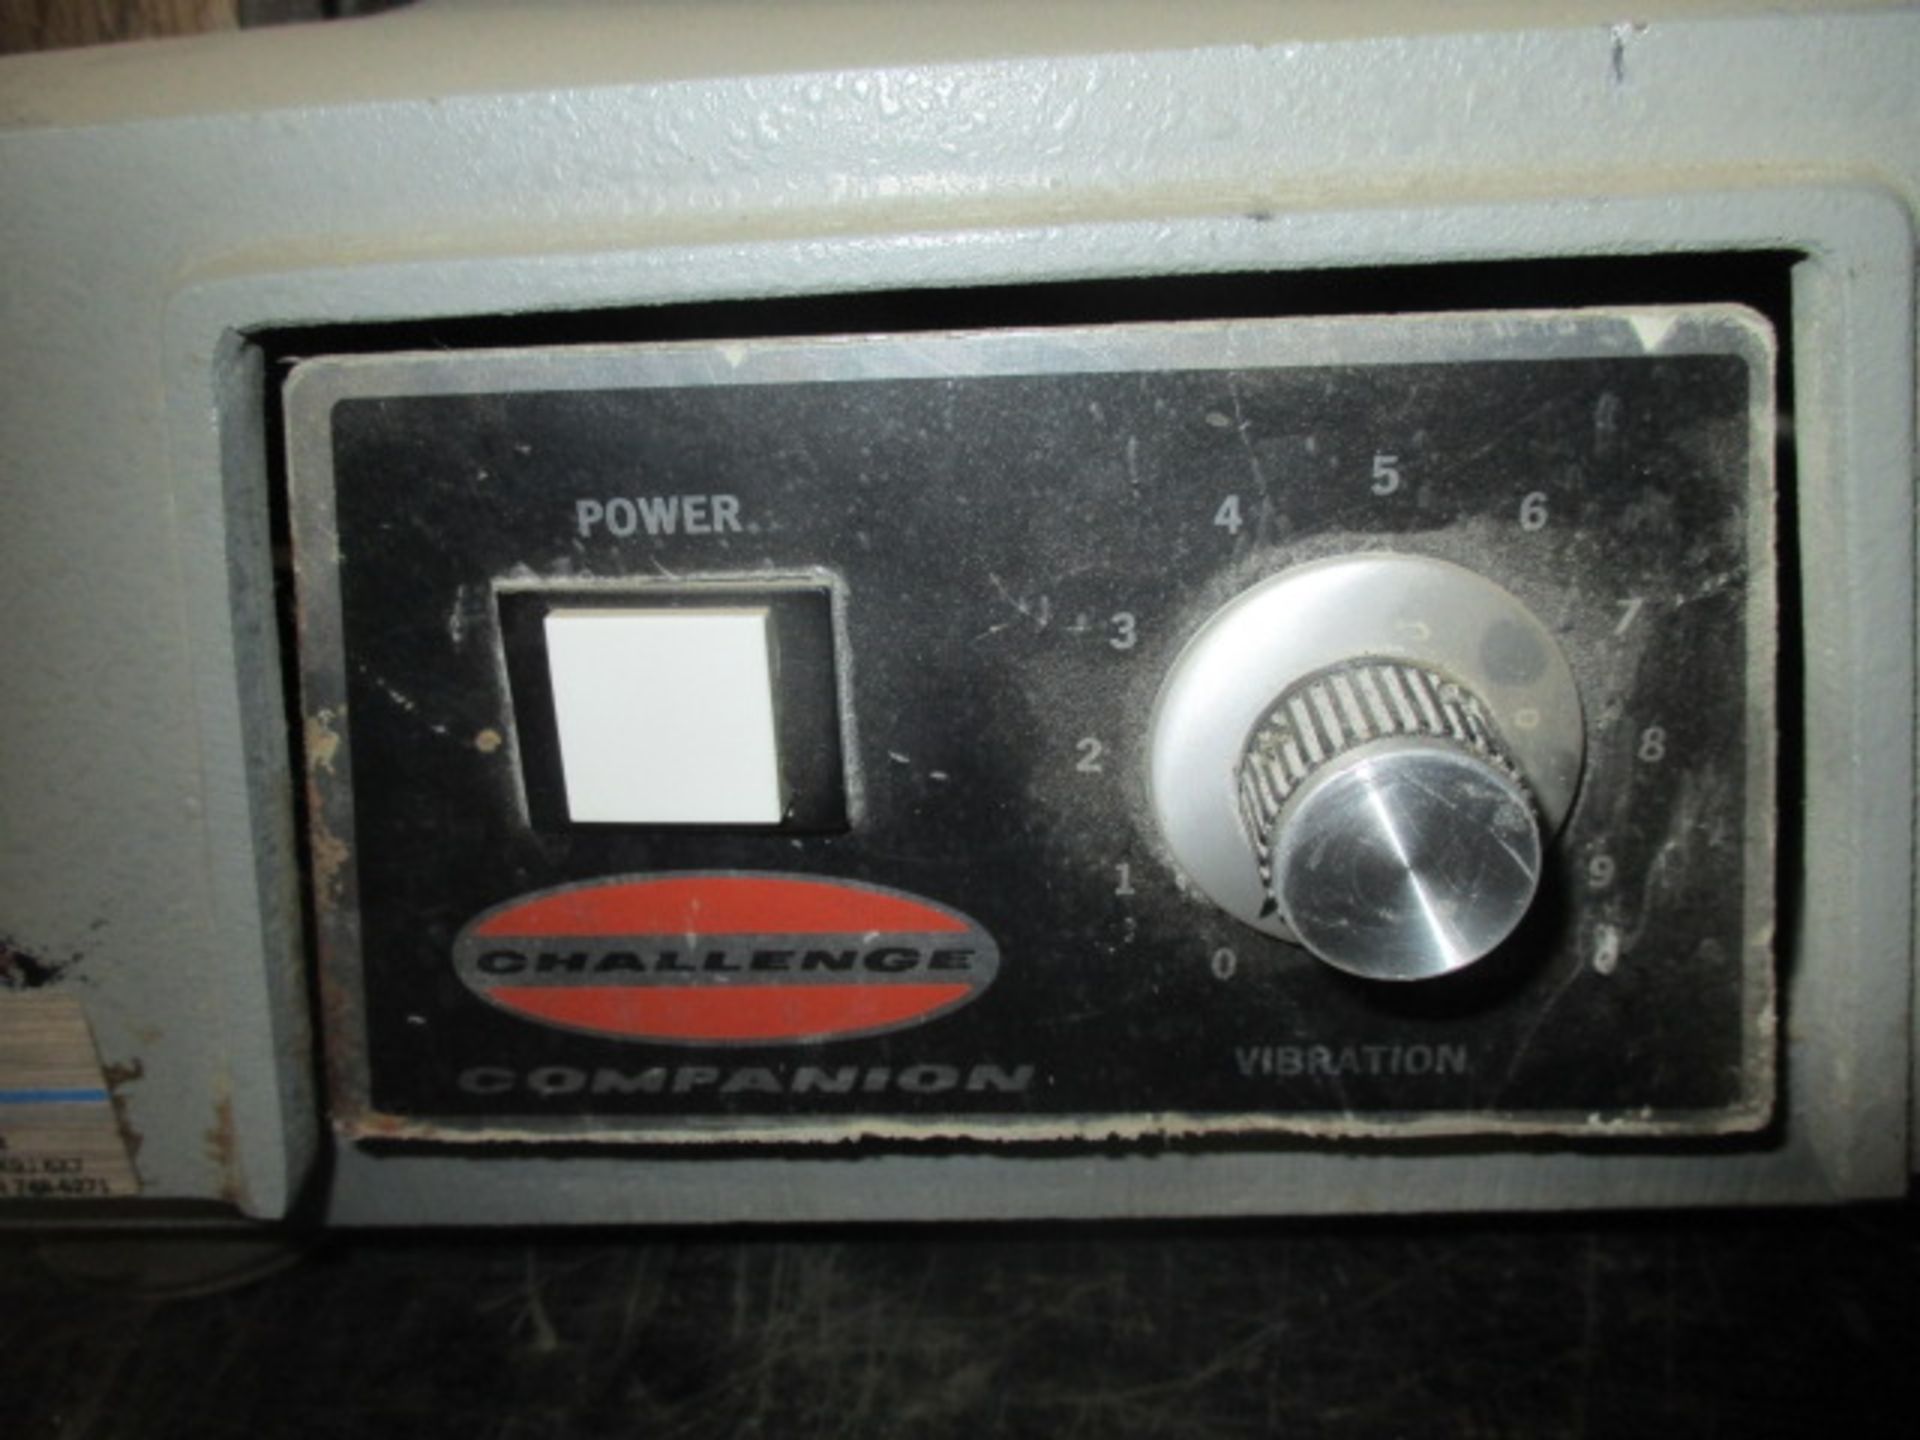 Companion Challanger Electric Vibrator